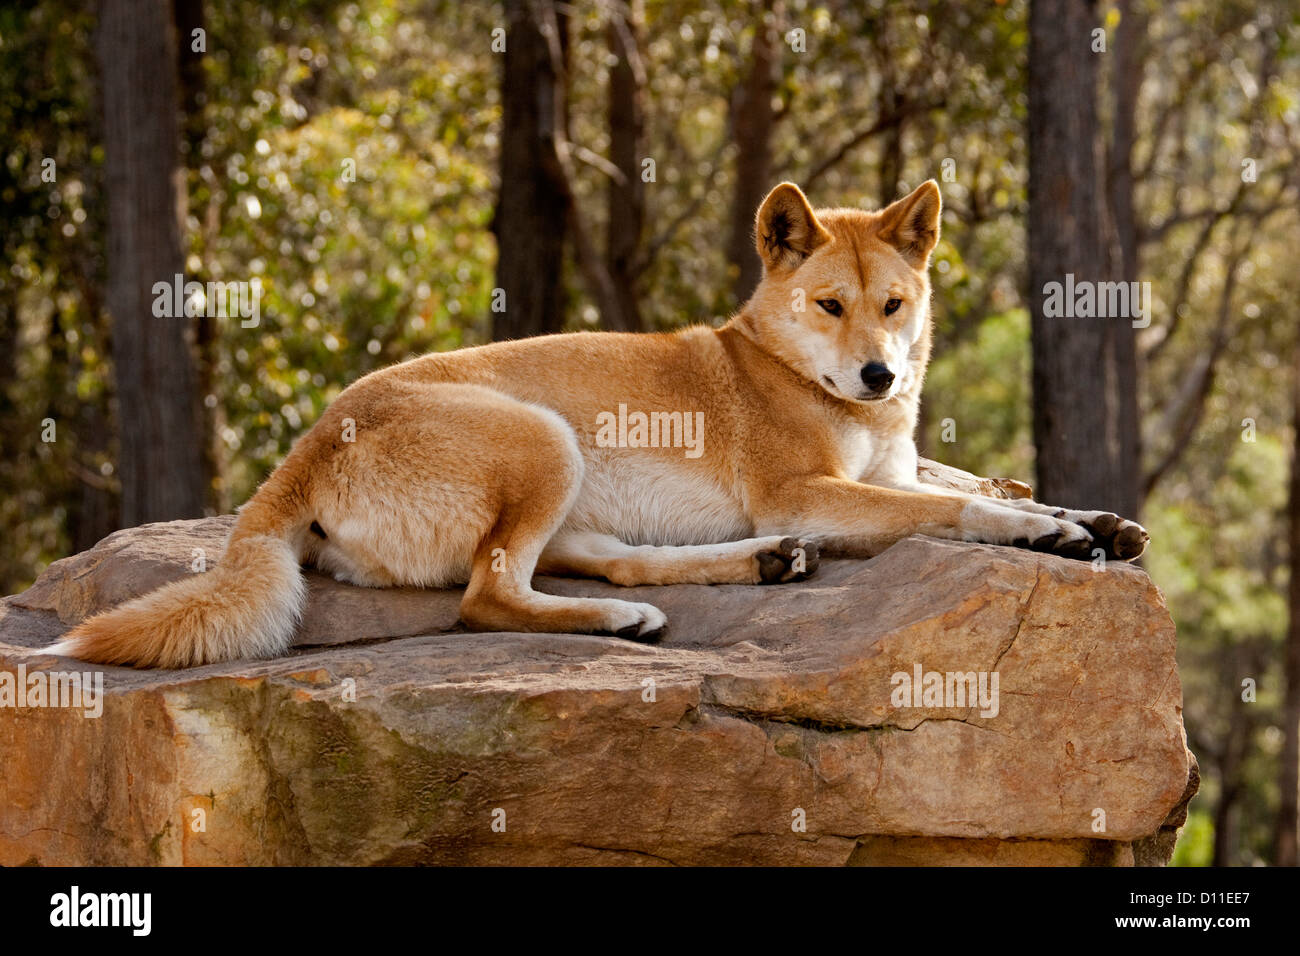 Australian dingo - native dog Canis lupus / familiaris- on rock in a forest at wildlife sanctuary near Merimbula, NSW Australia Stock Photo